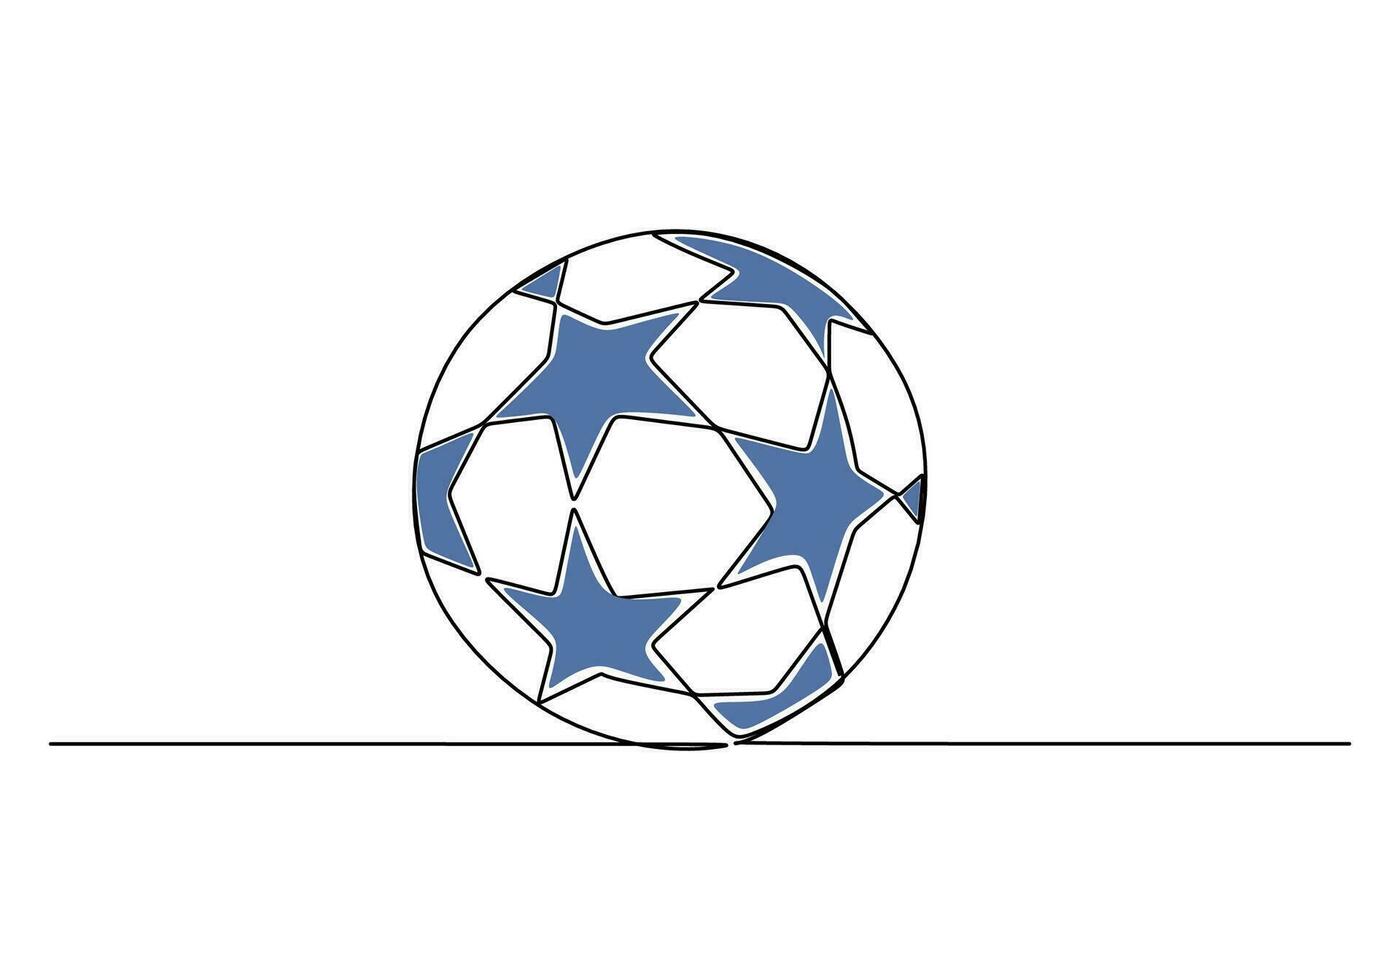 fútbol pelota uno línea dibujo continuo mano dibujado deporte tema objeto vector